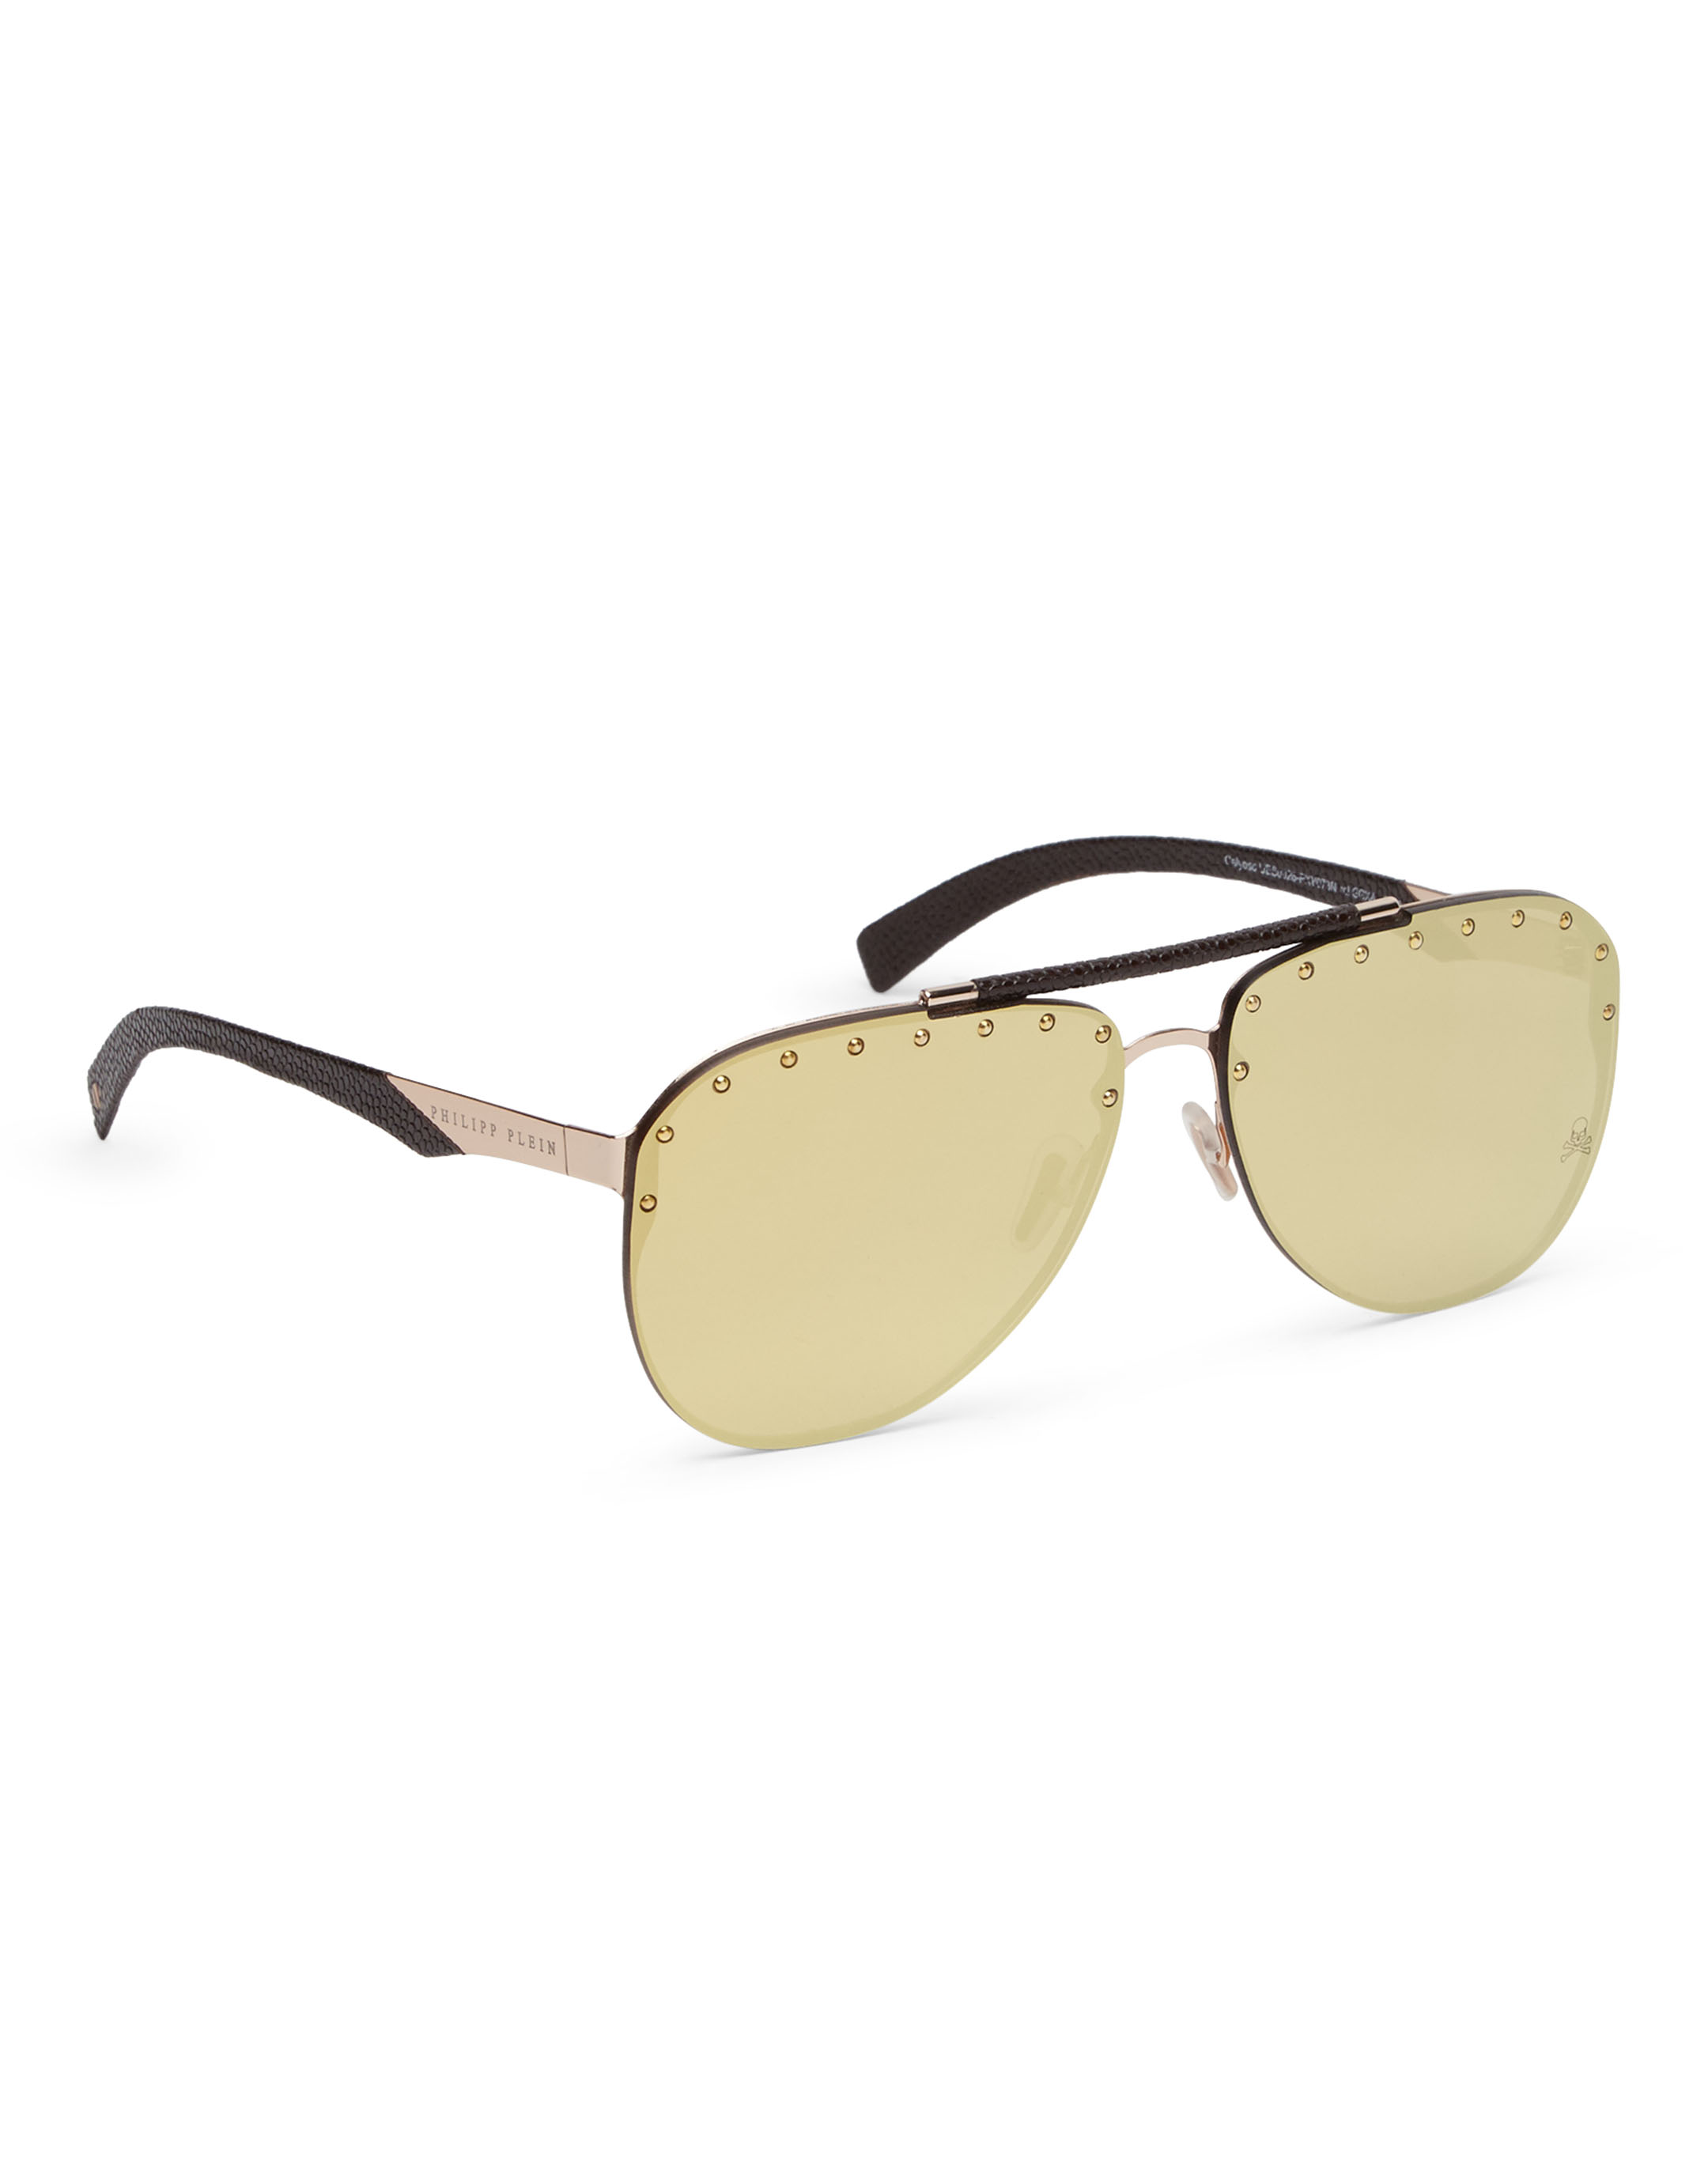 Sunglasses "Calypso" | Philipp Plein Outlet